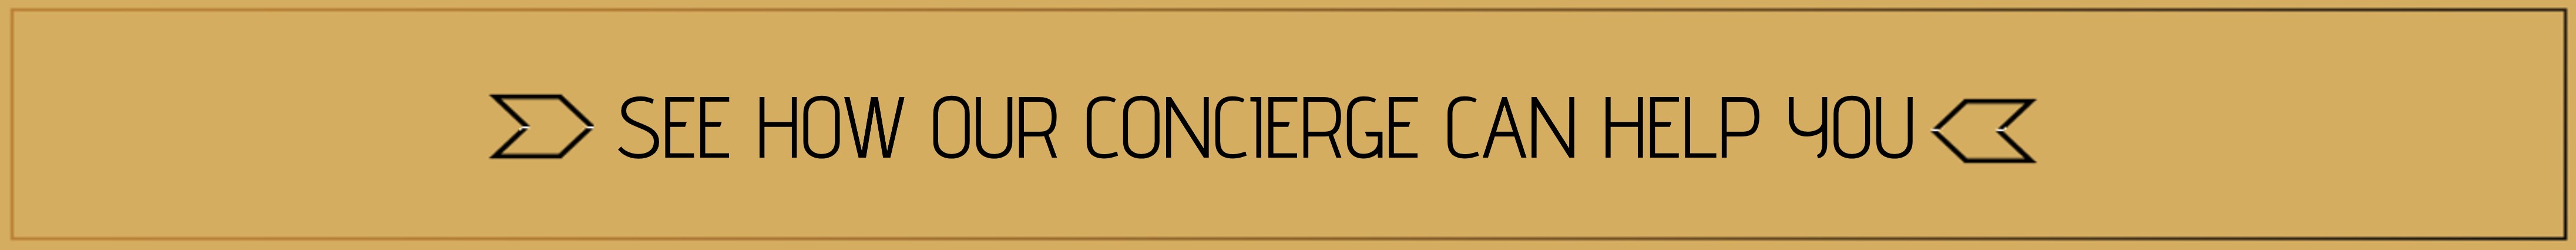 sincura concierge service level agreements